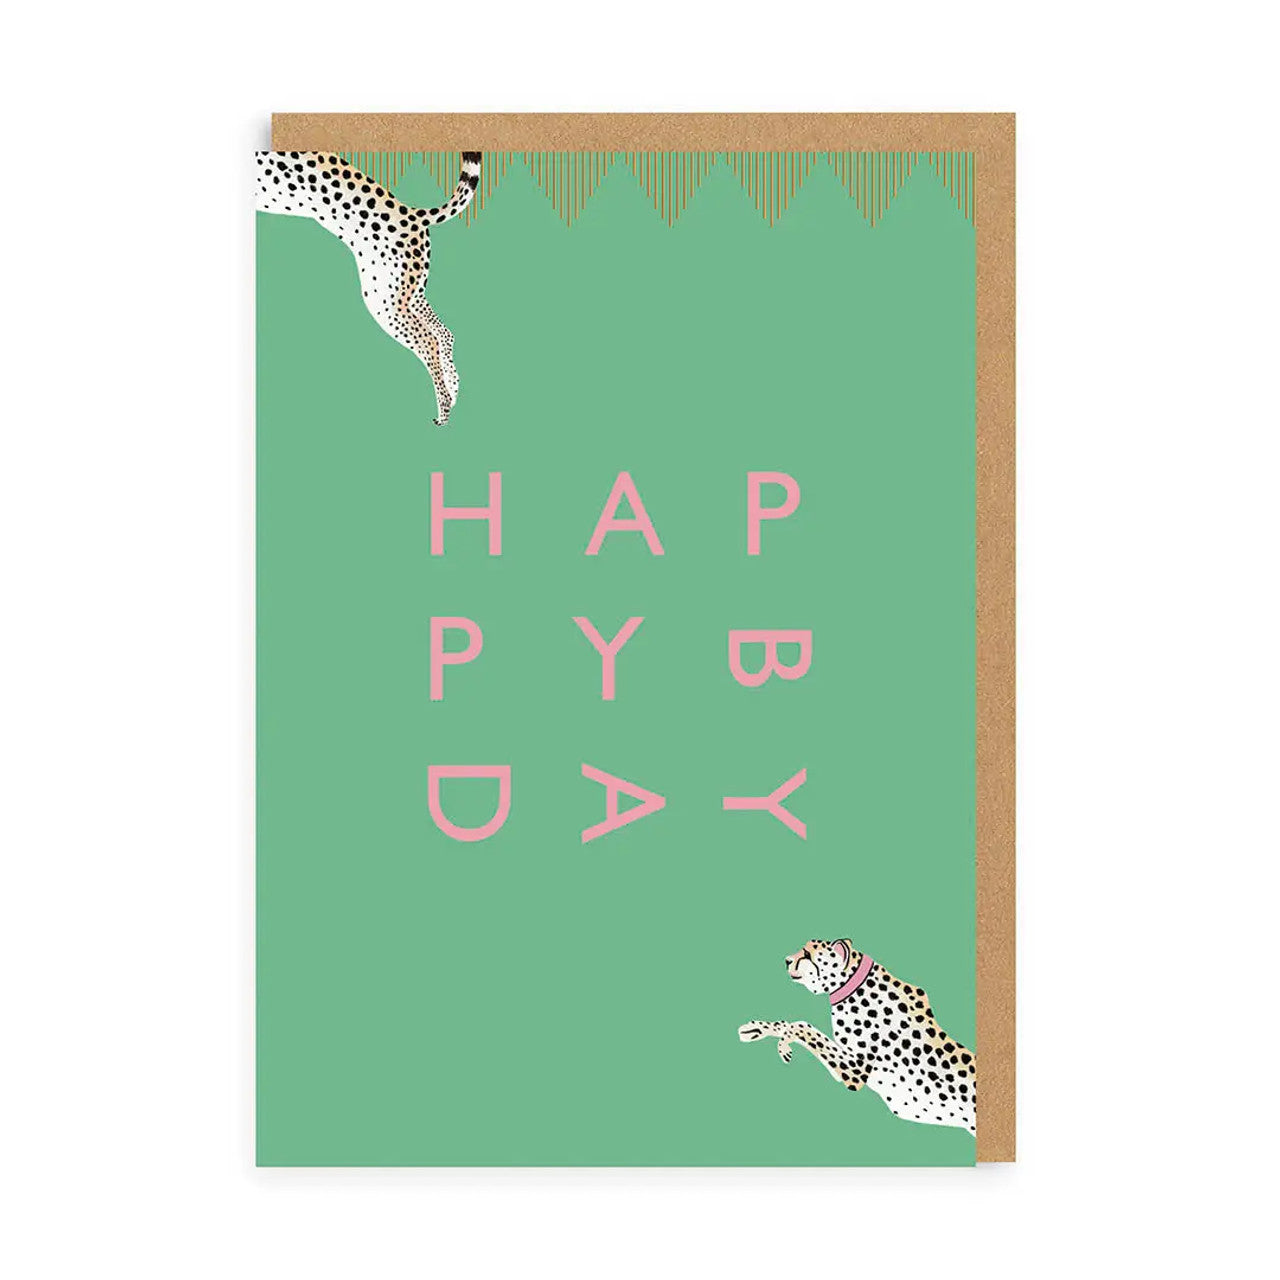 Birthday Card text reads "Happy BDay"